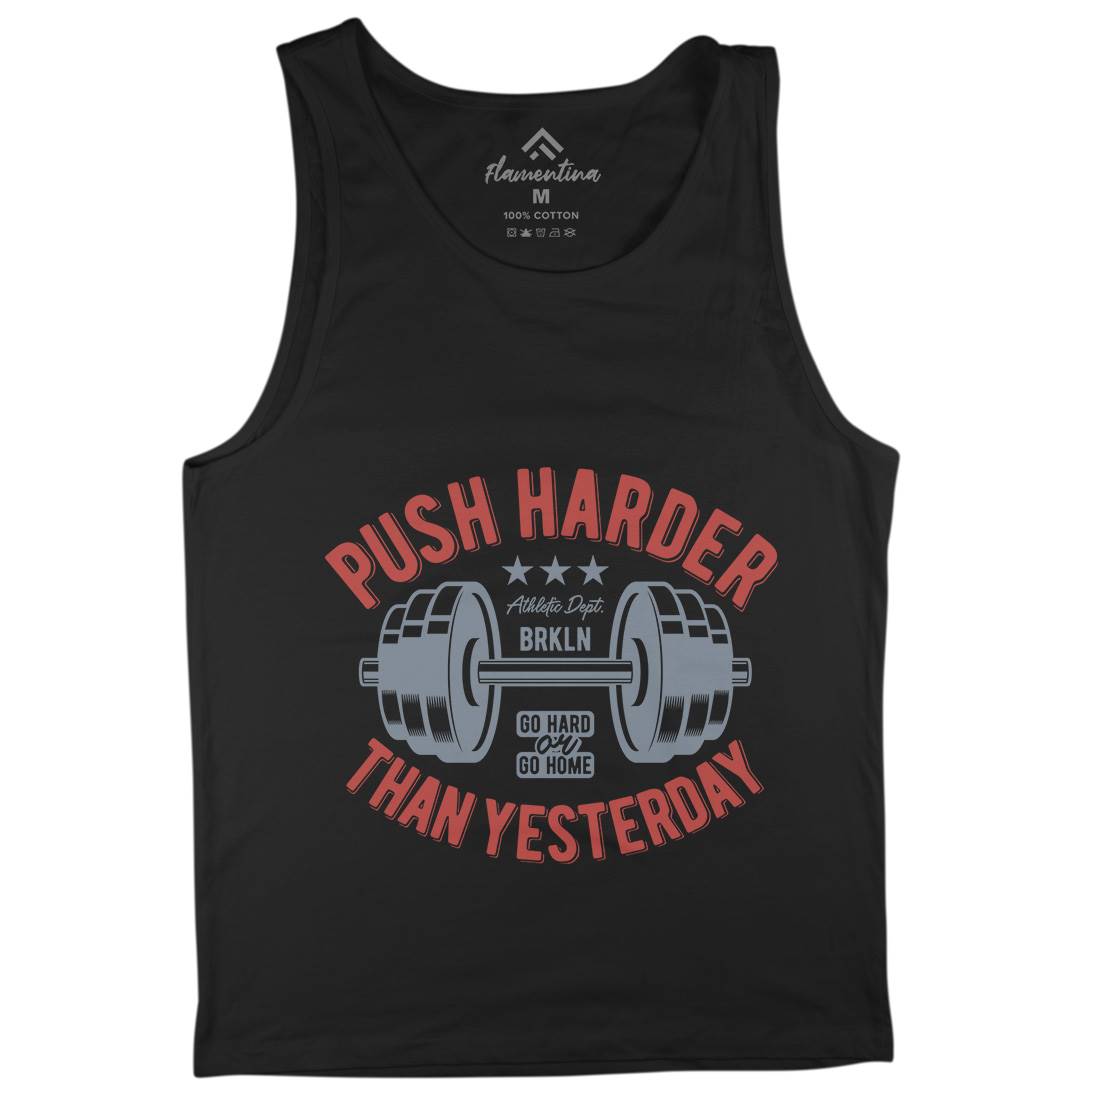 Push Harder Mens Tank Top Vest Gym B301